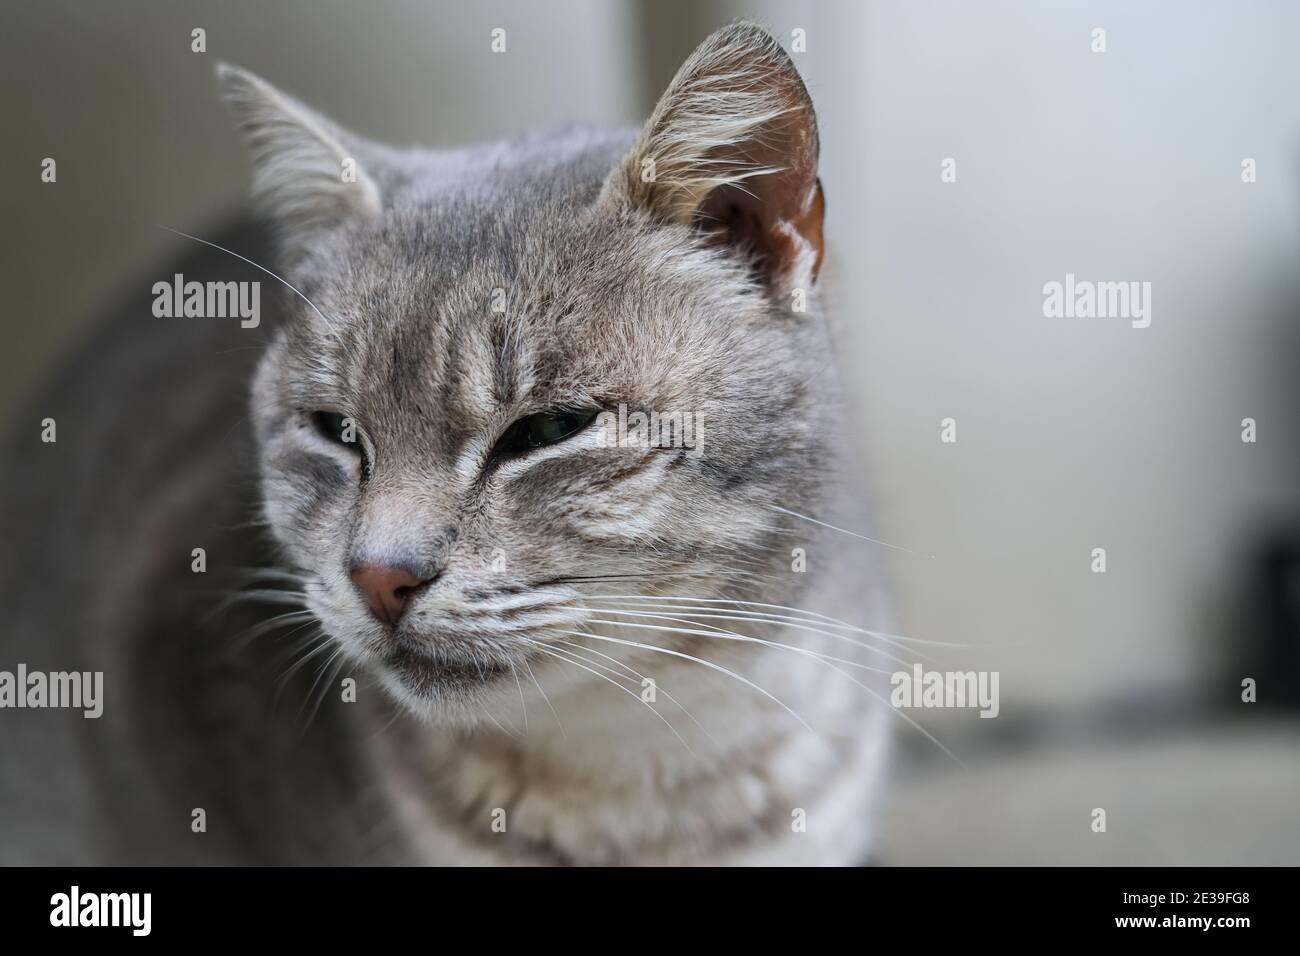 Isolated grey cat face portrait close up,feline pet animals wallpaper Stock Photo